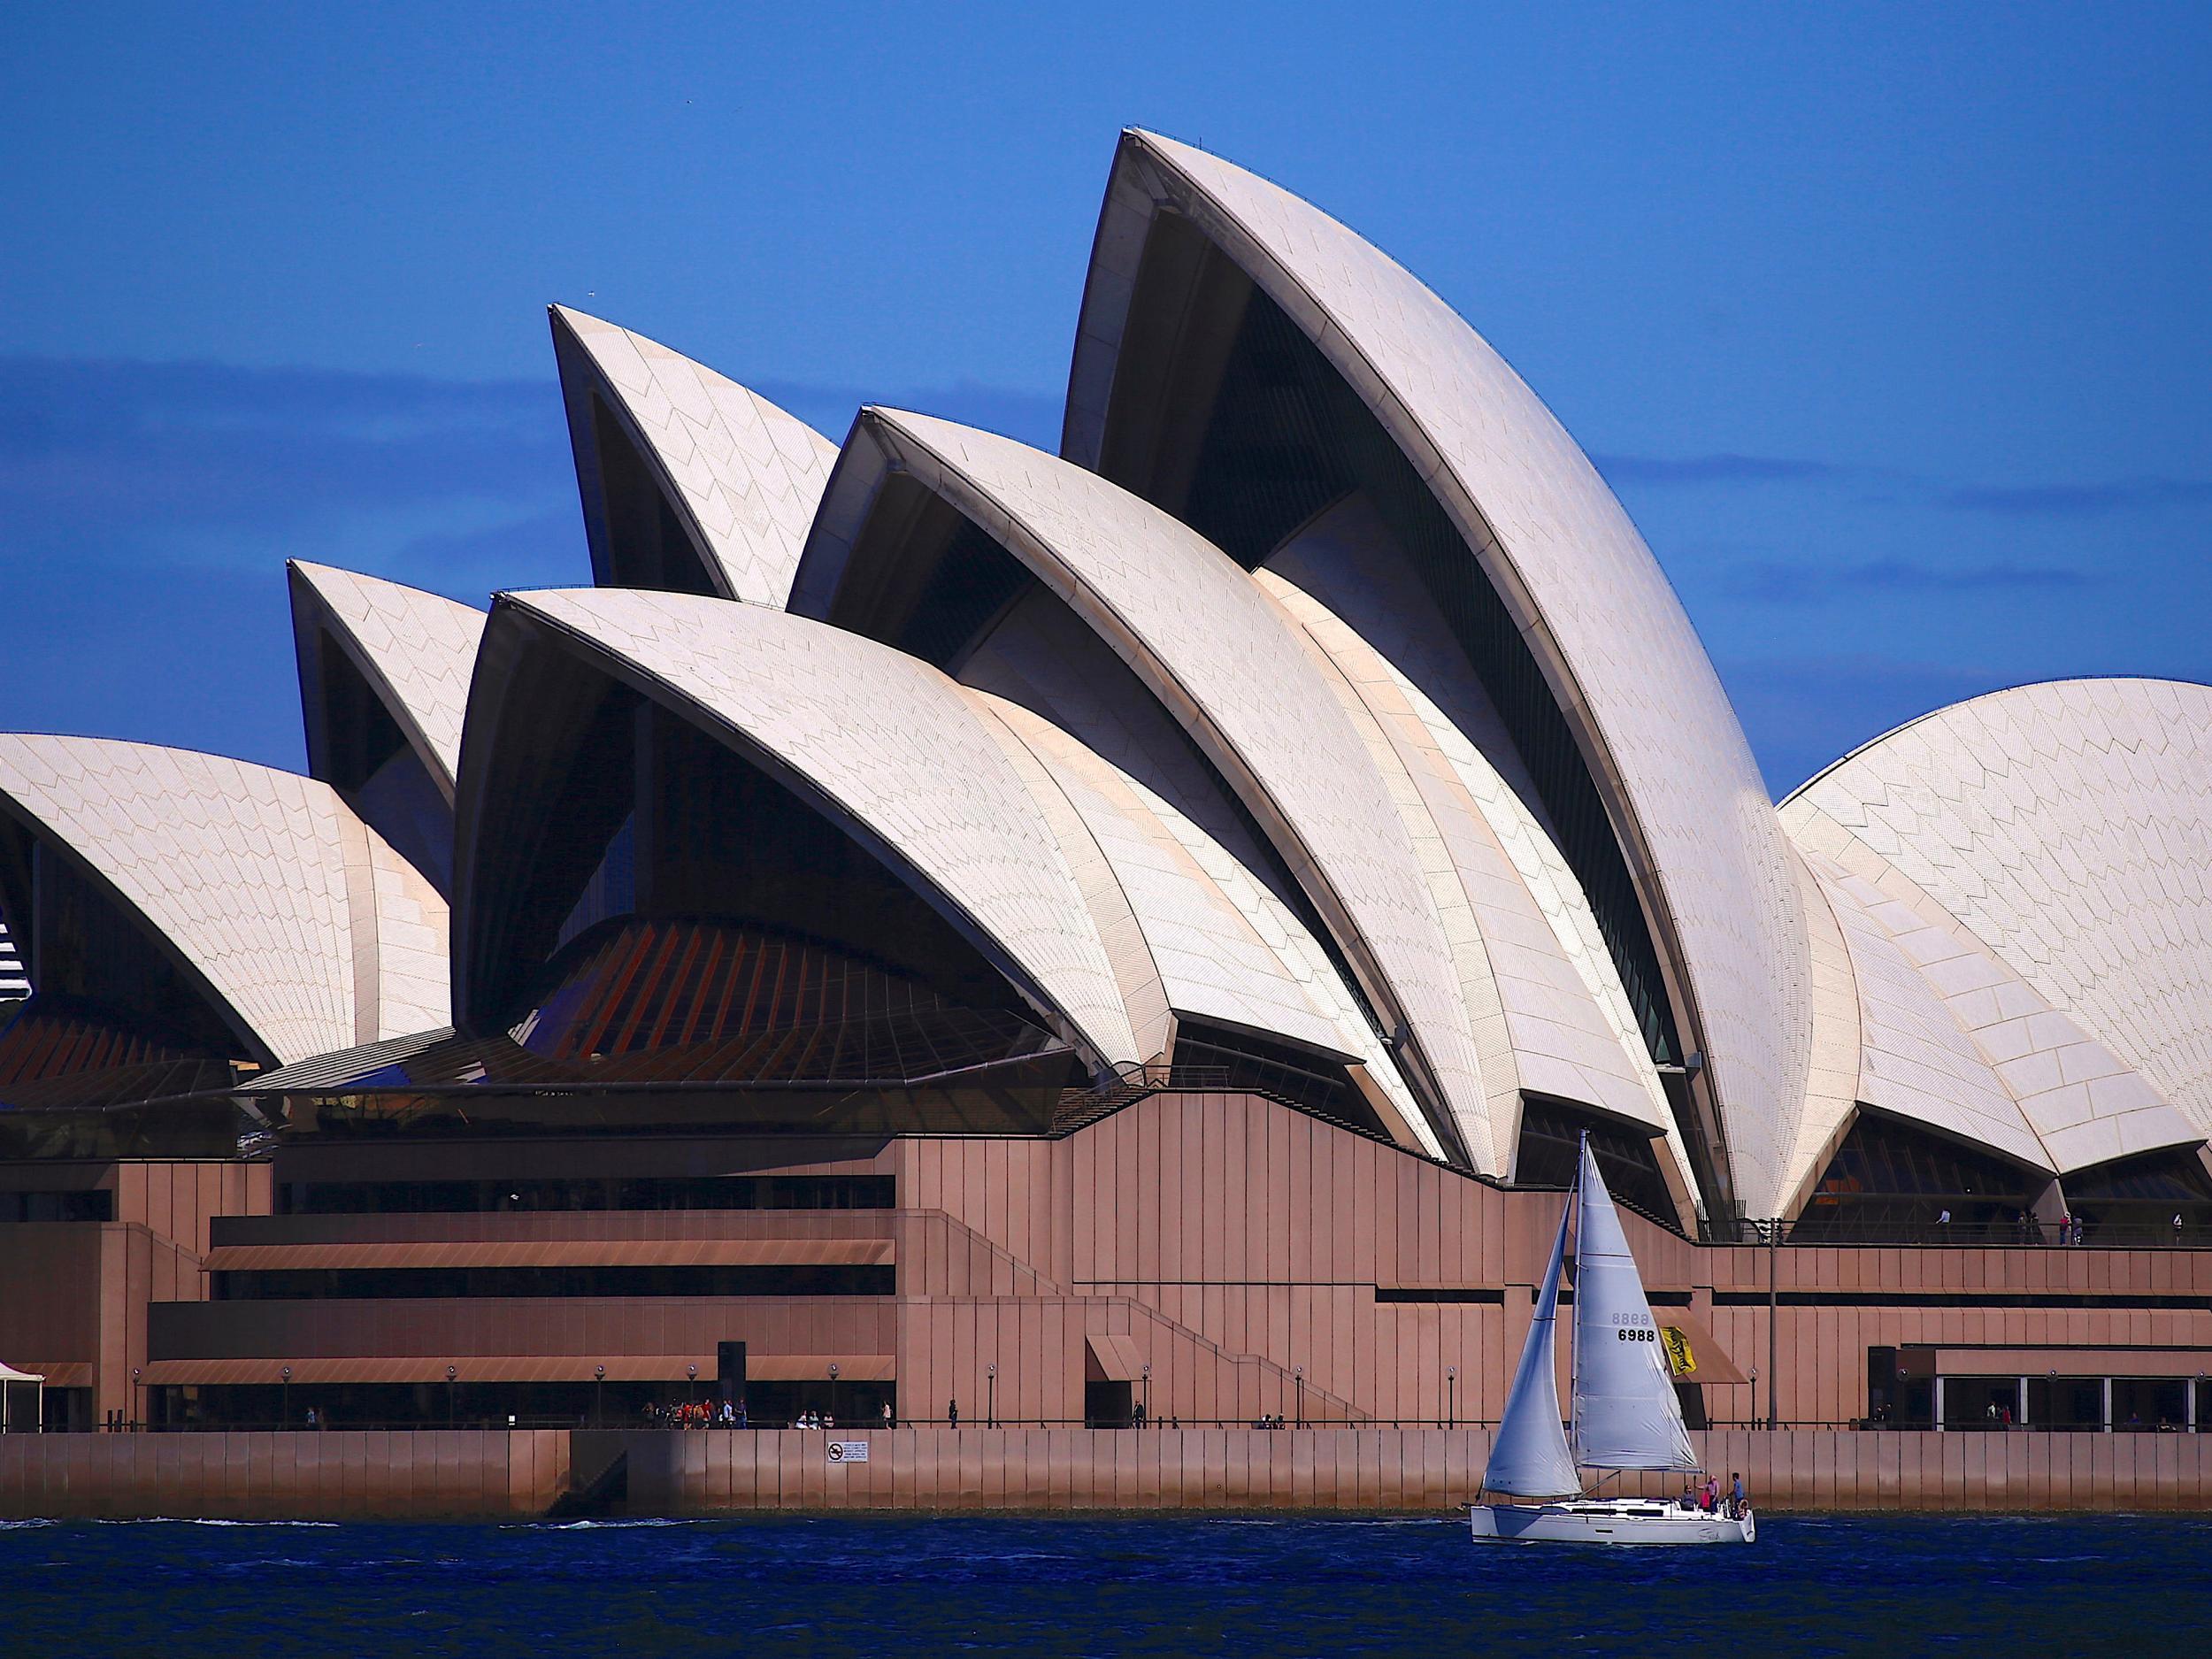 Sydney Opera House in Sydney, Australia on 23 October 2017 (REUTERS/David Gray)